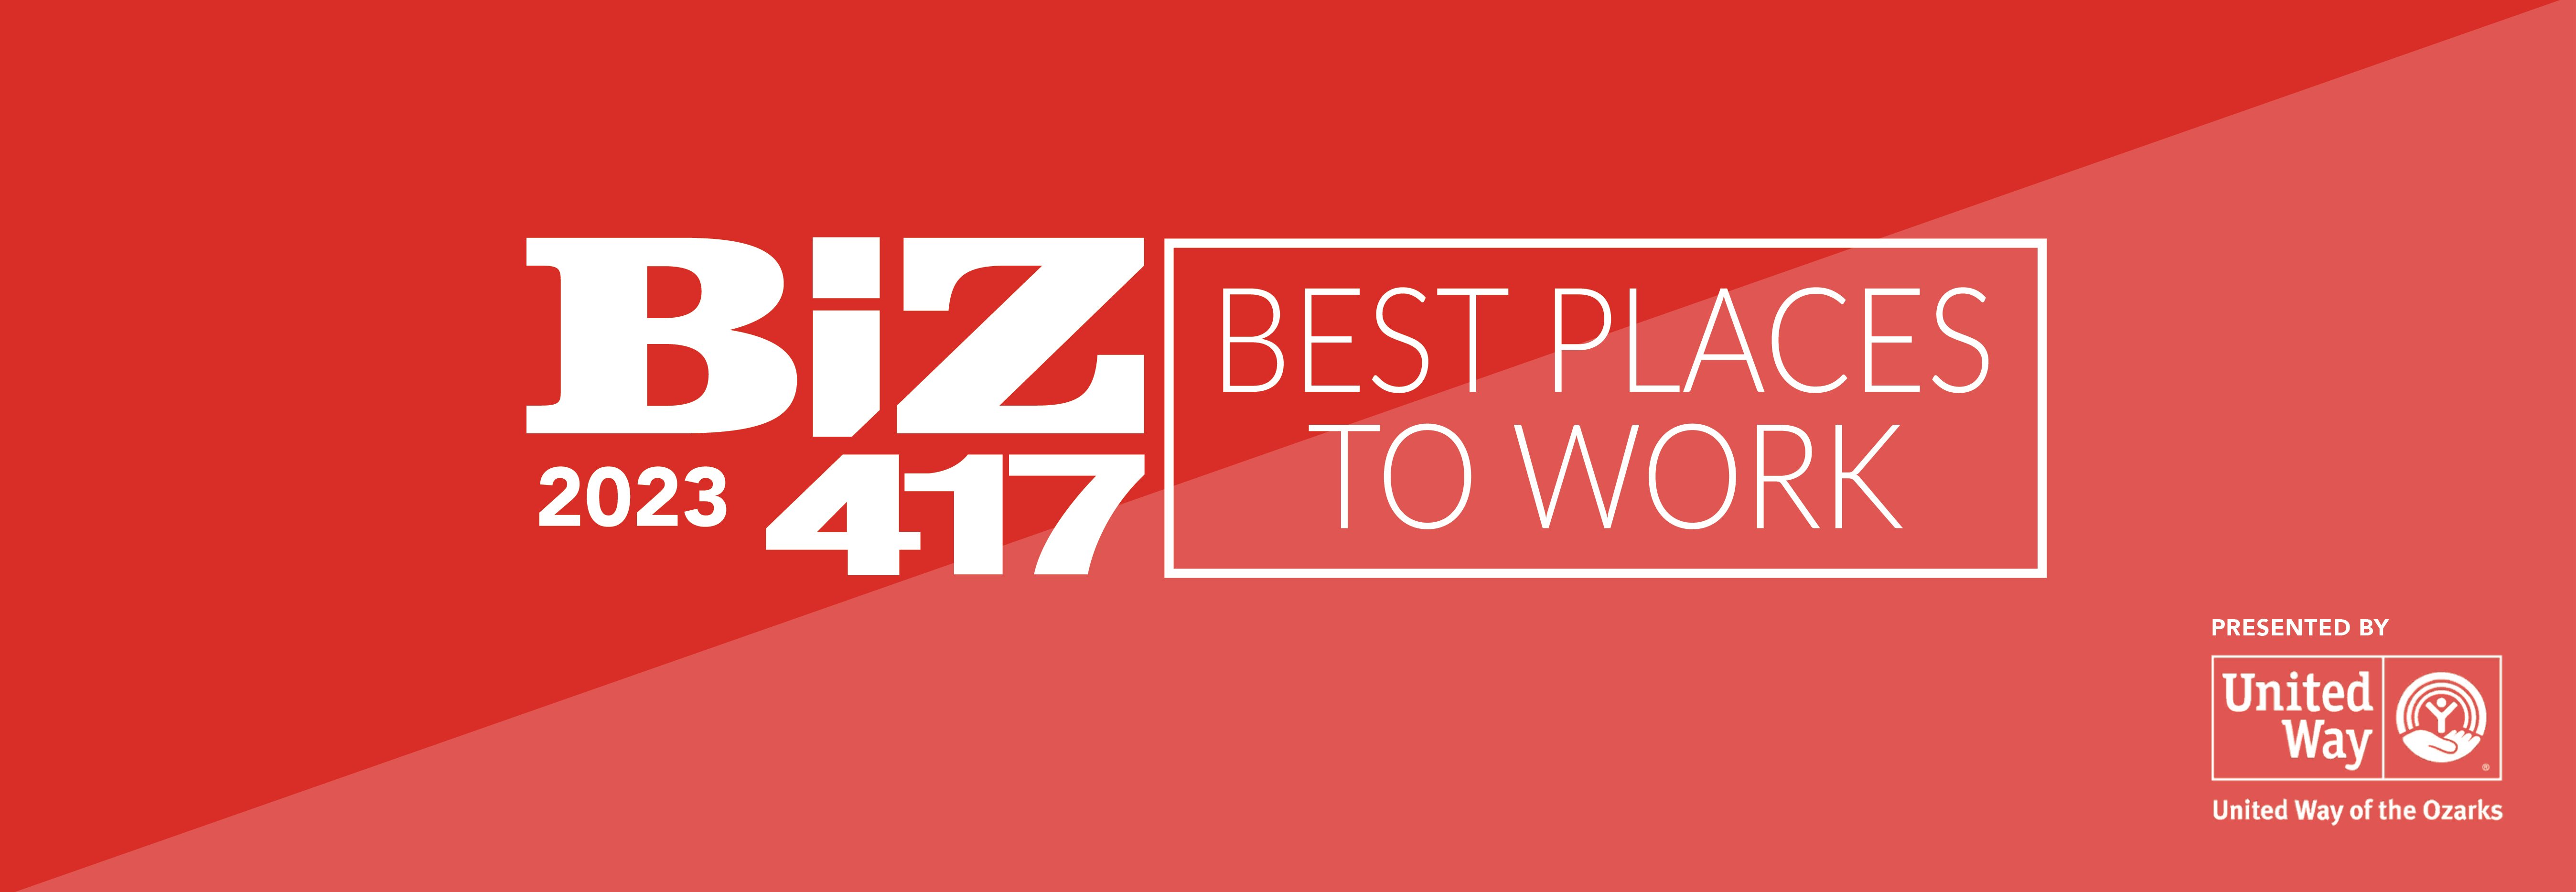 Biz 417's Best Places to Work Celebration banner image